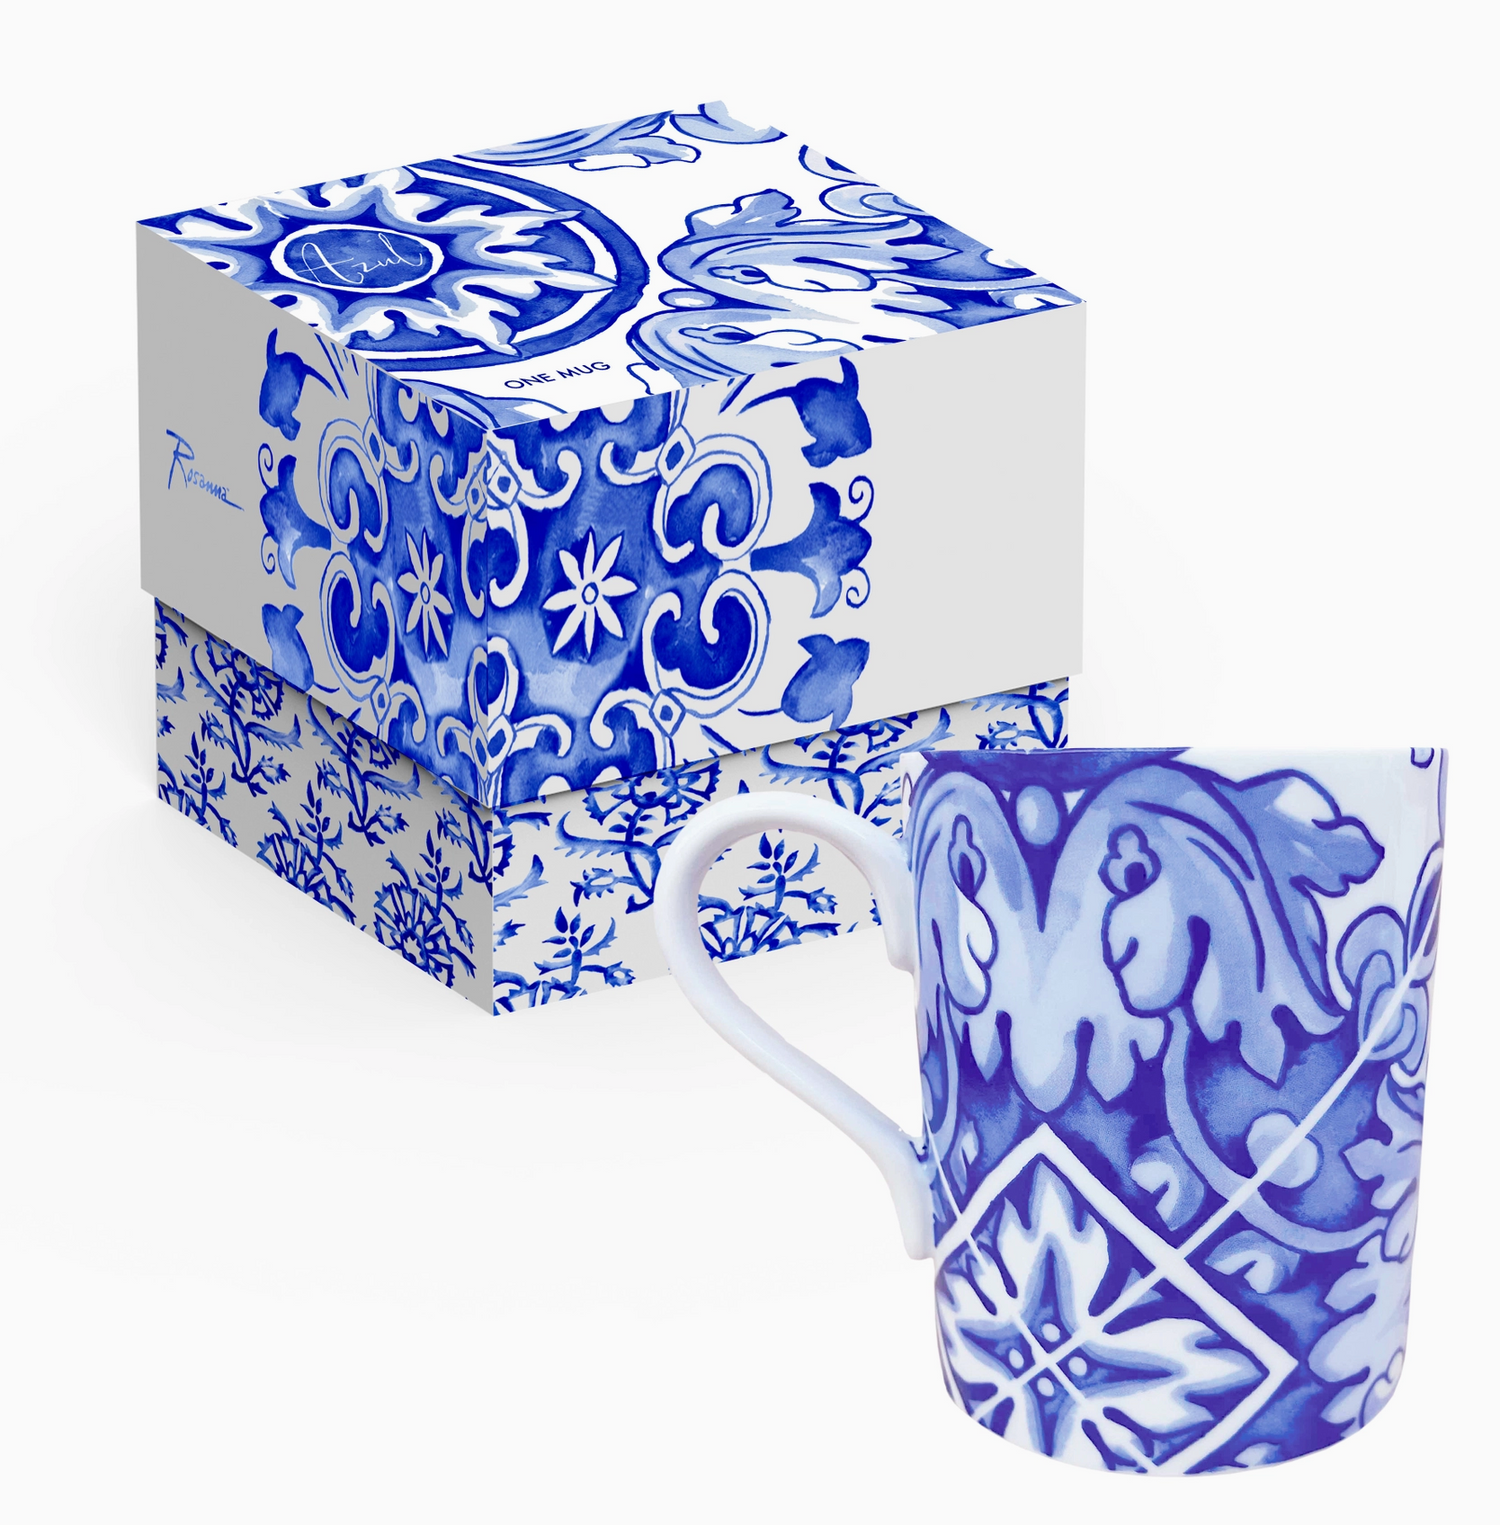 Azul blue and white hand painted mug by Rosanna Designs